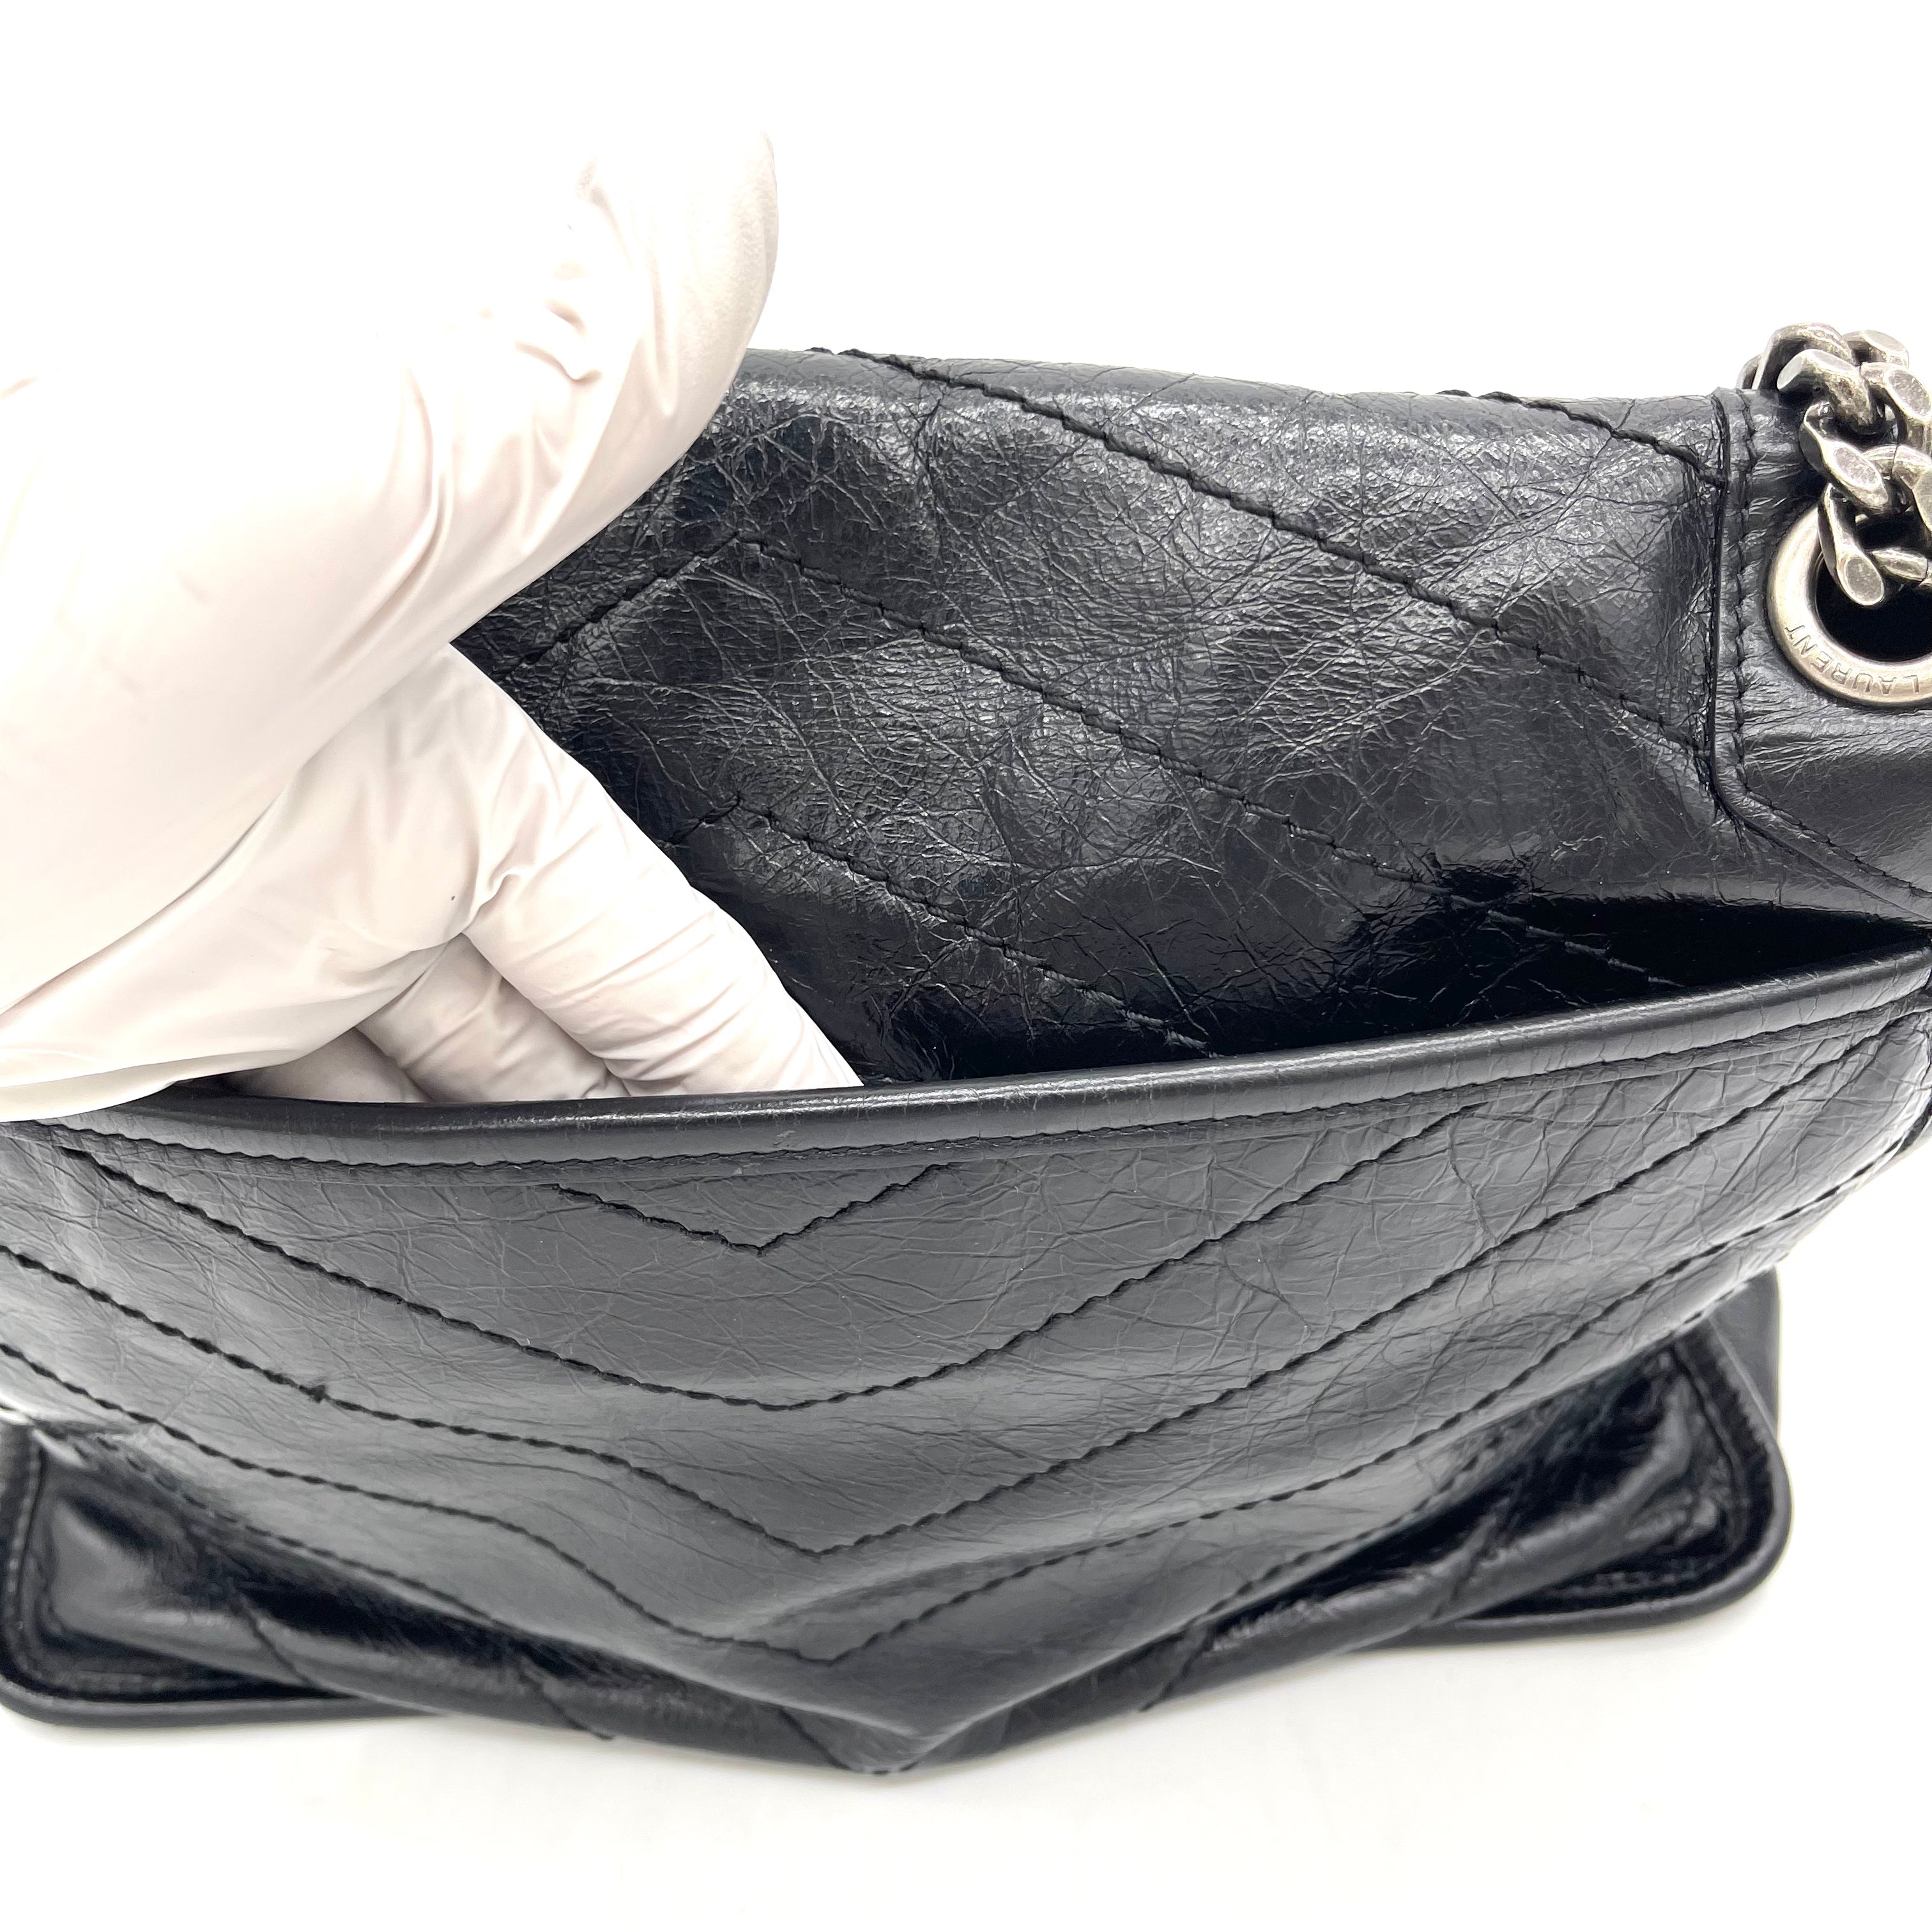 At Auction: Saint Laurent Medium Niki Chain Bag in Beige Crinkled